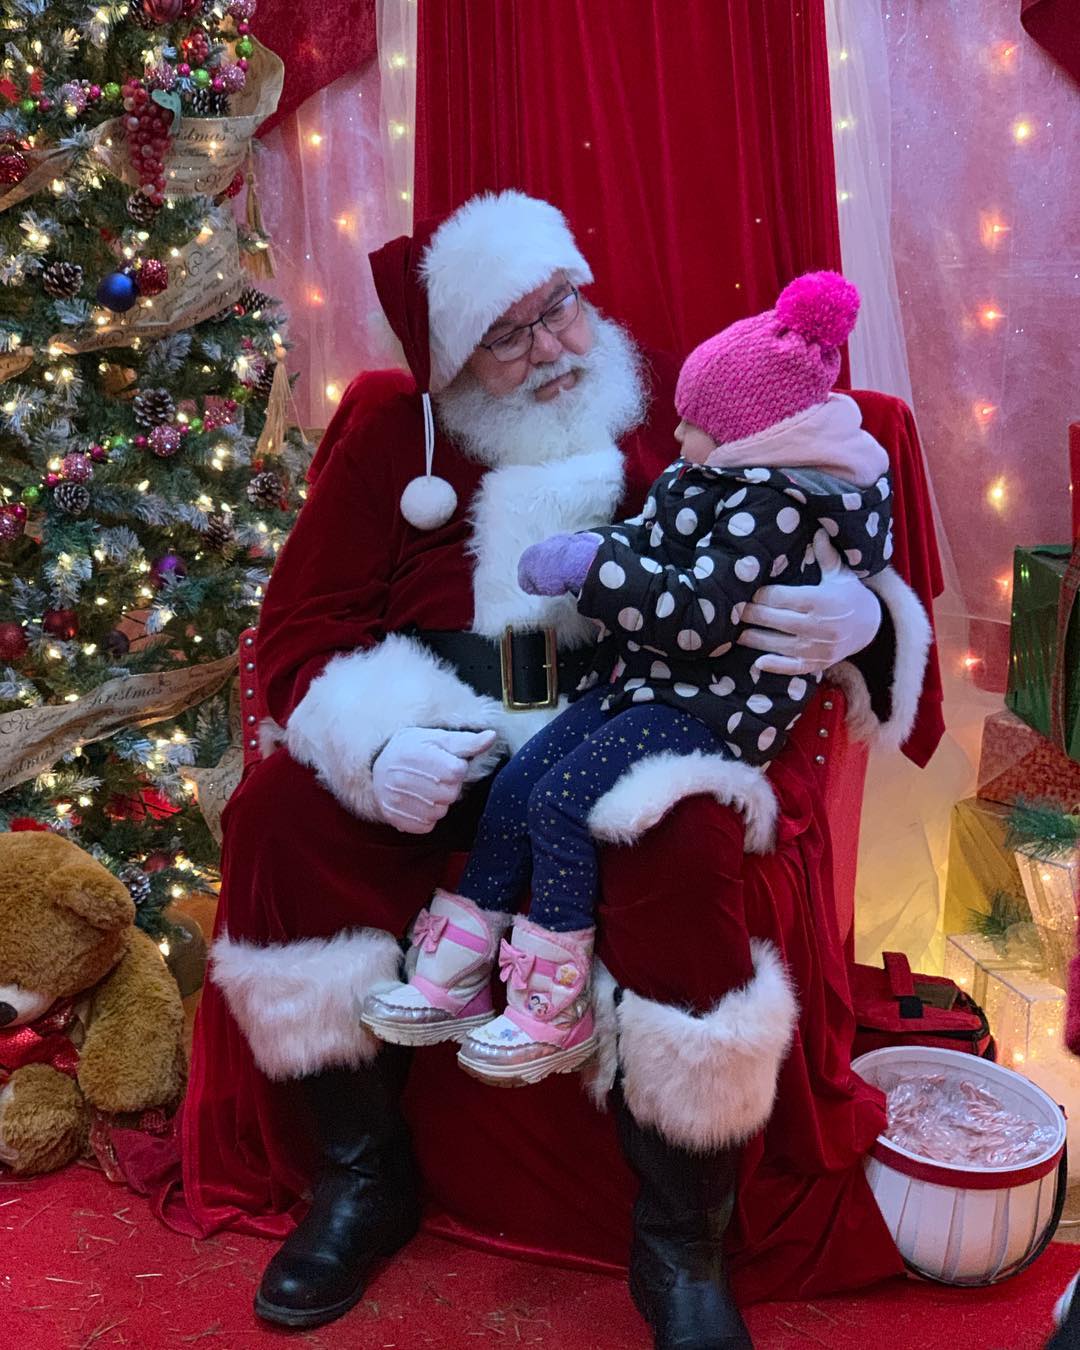 Santa Talking to a Little Girl. Photo by Instagram user @karencjharris